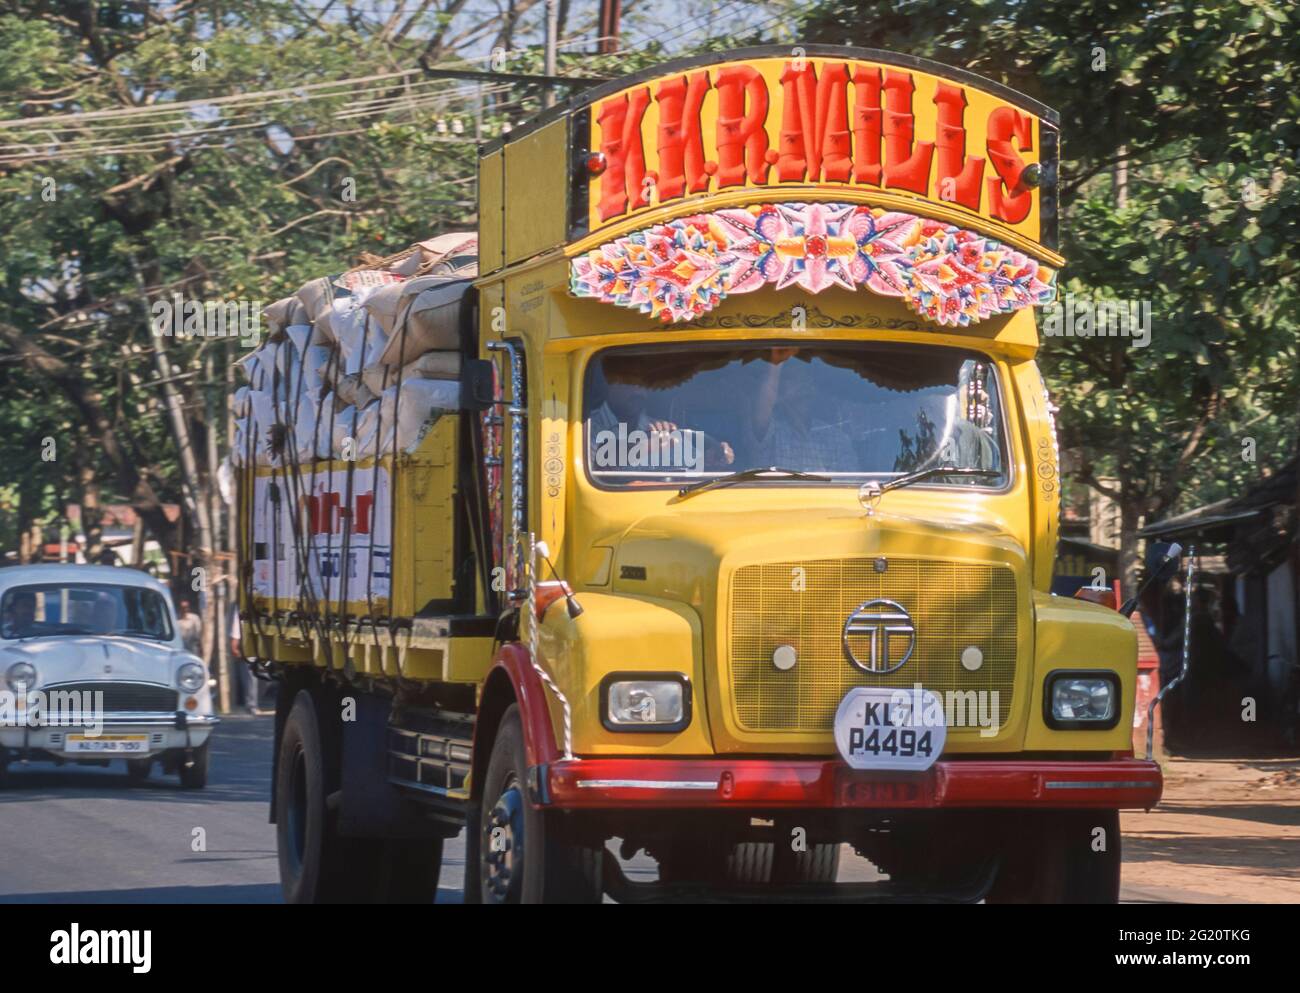 KERALA, INDIA - Colorful truck on street. Stock Photo